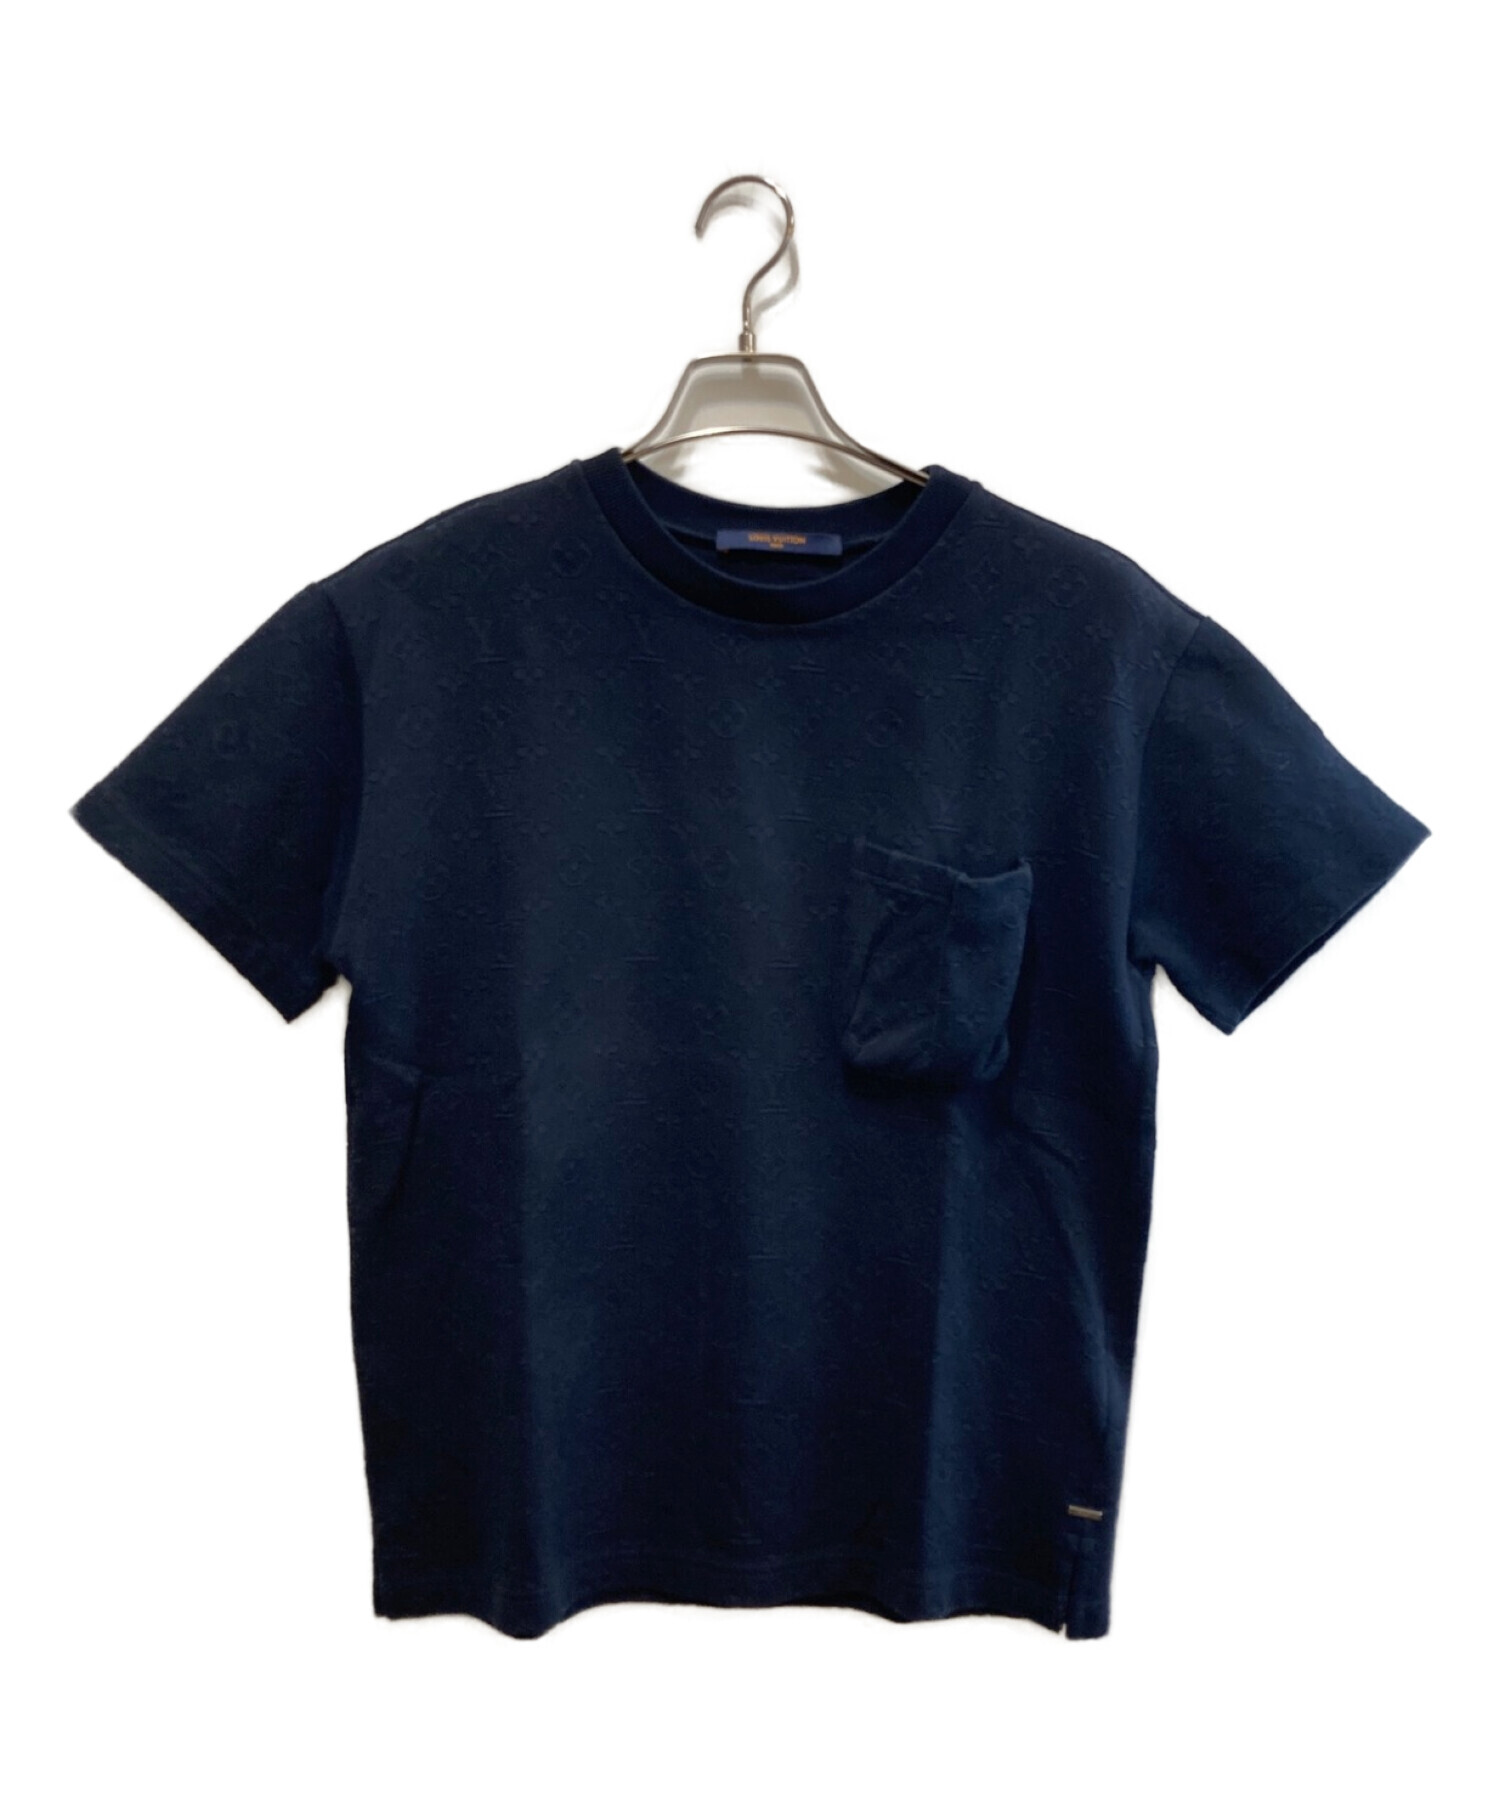 LOUIS VUITTON (ルイ ヴィトン) シグネチャー3DポケットモノグラムTシャツ ネイビー サイズ:XS